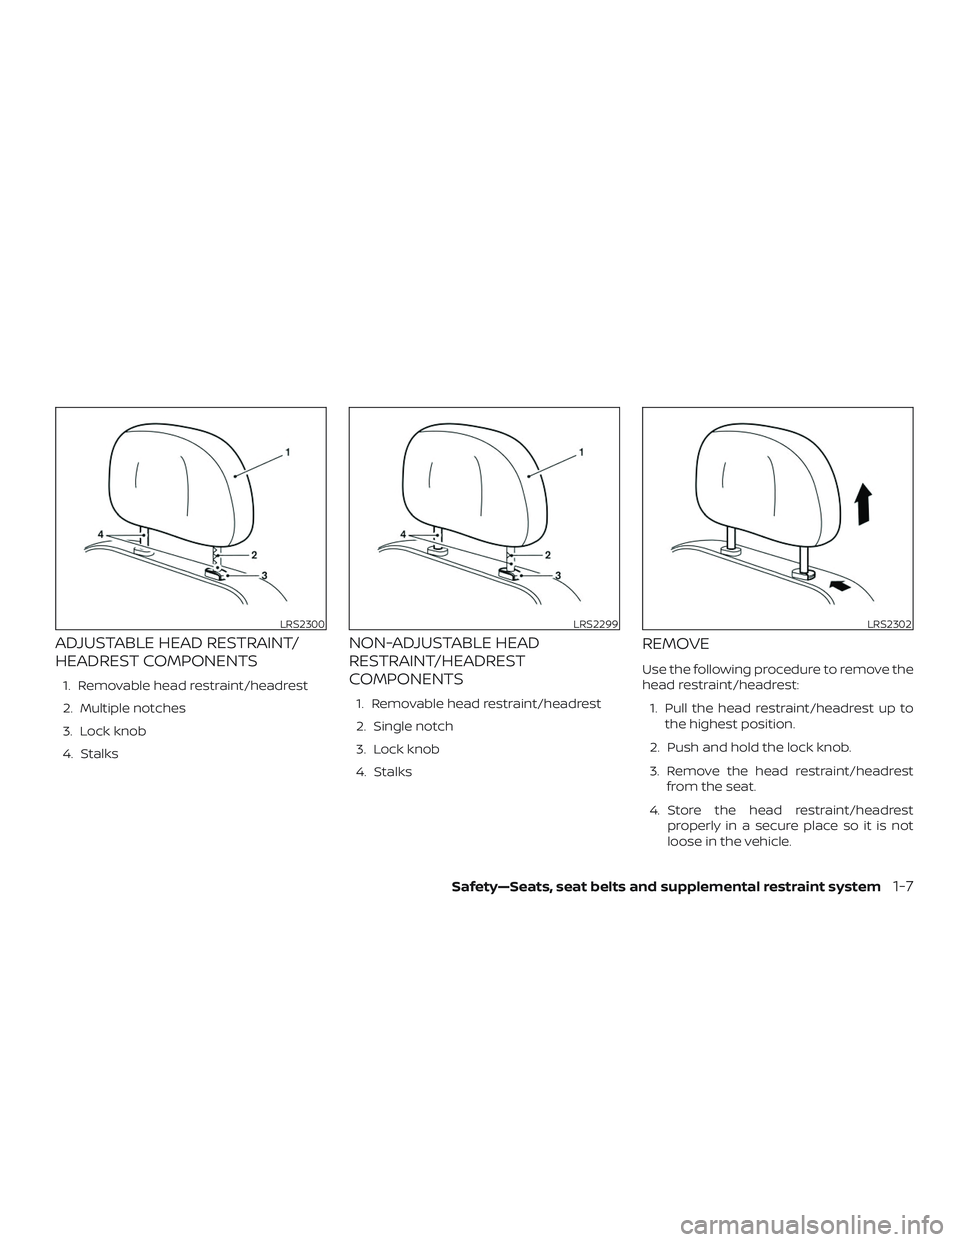 NISSAN VERSA 2019  Owners Manual ADJUSTABLE HEAD RESTRAINT/
HEADREST COMPONENTS
1. Removable head restraint/headrest
2. Multiple notches
3. Lock knob
4. Stalks
NON-ADJUSTABLE HEAD
RESTRAINT/HEADREST
COMPONENTS
1. Removable head restr